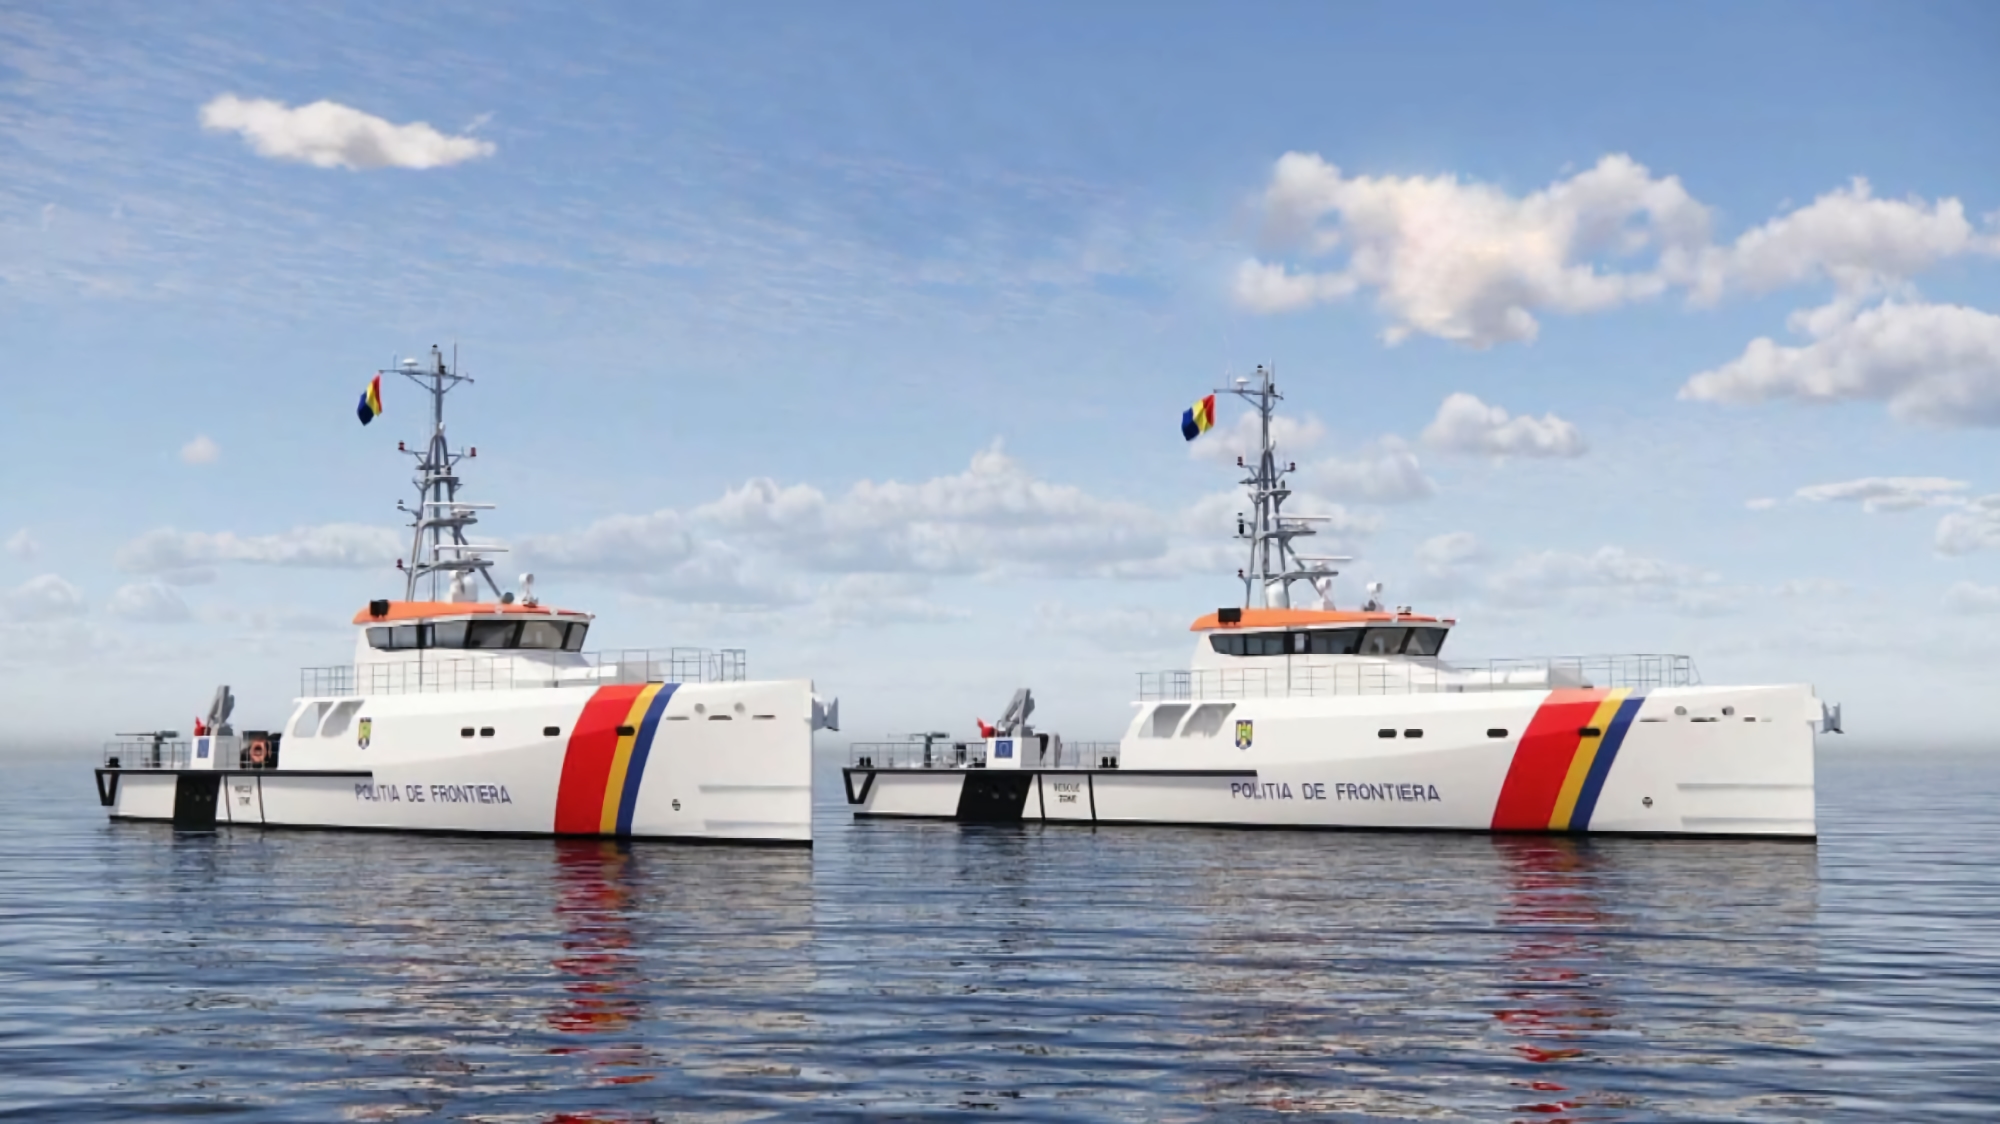 Damen Shipyard debarked the first FCS 4008 Patrol ship for Romania